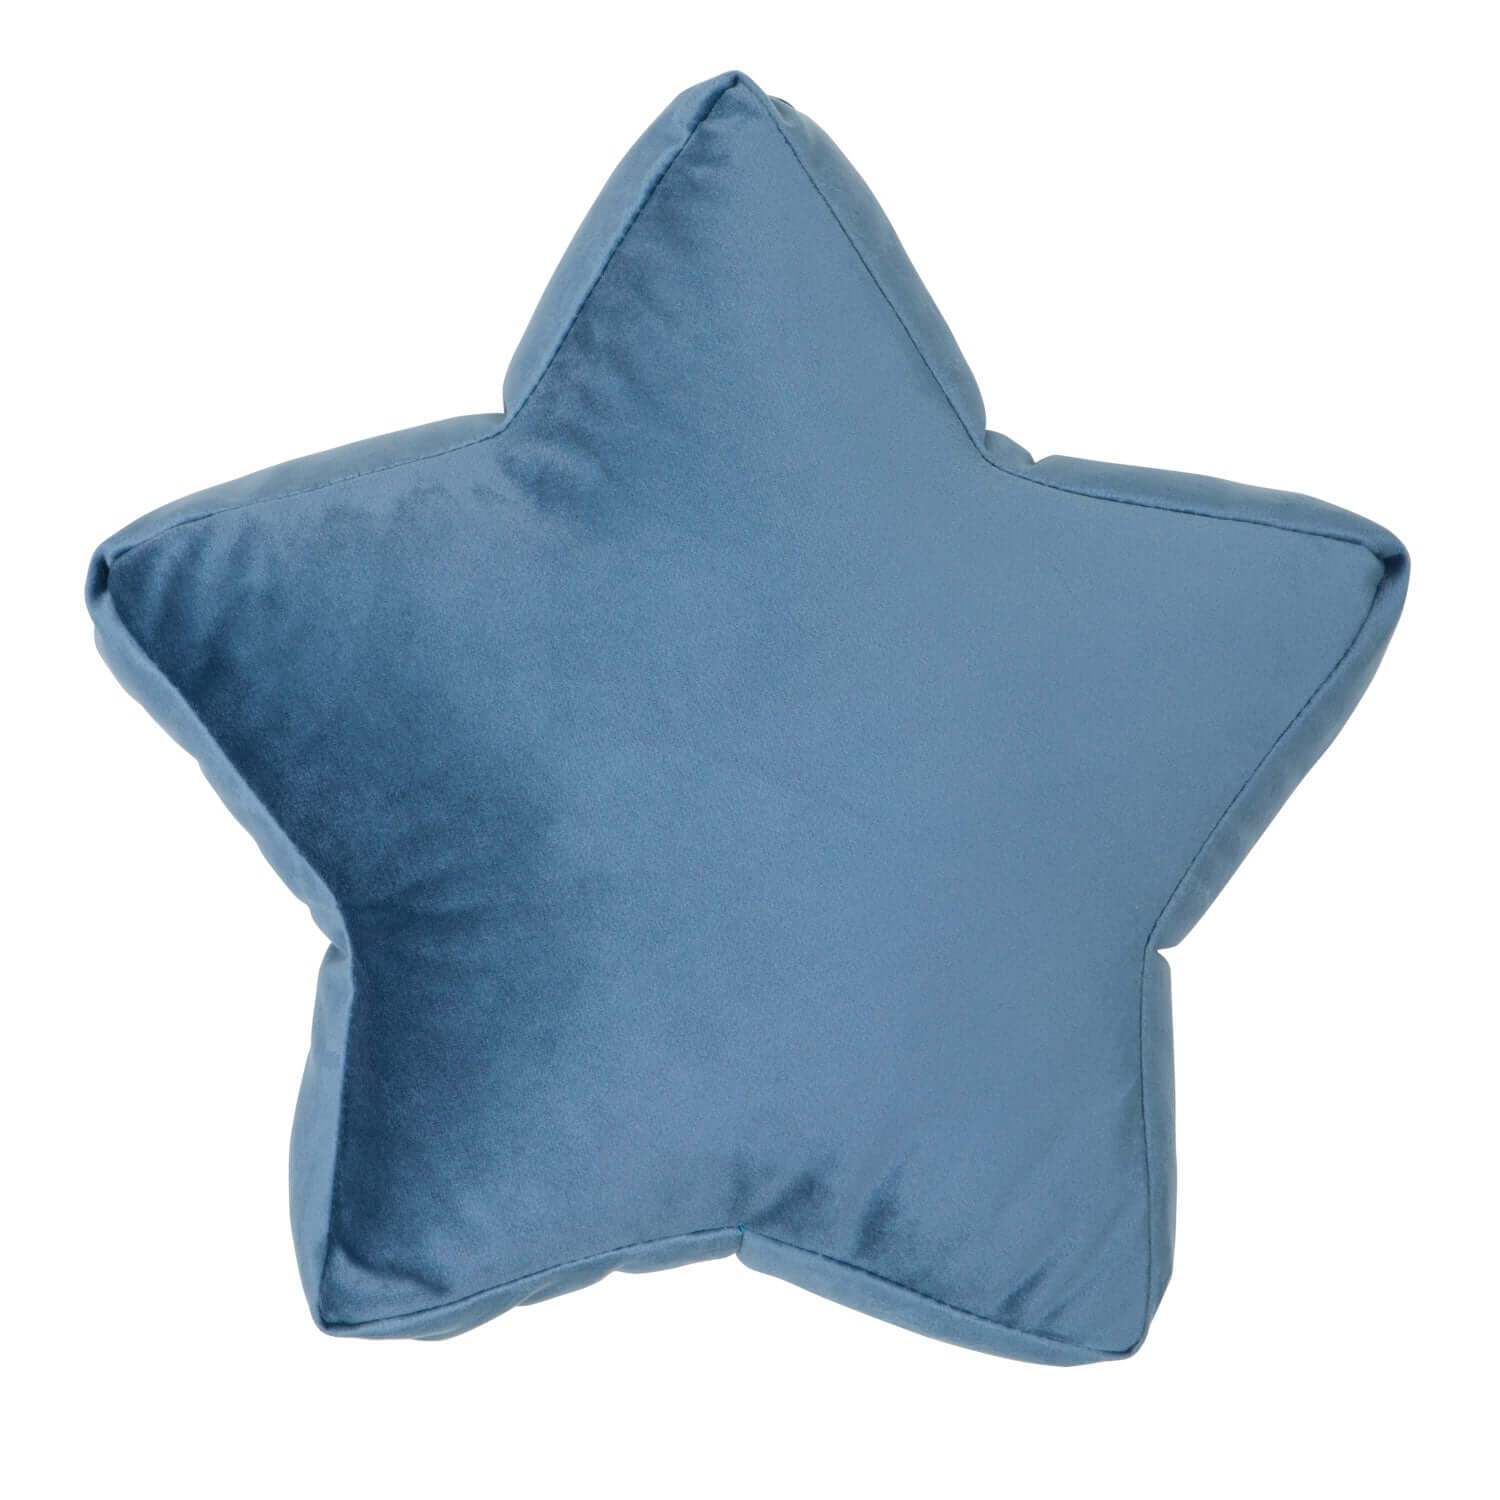 Little star cushion